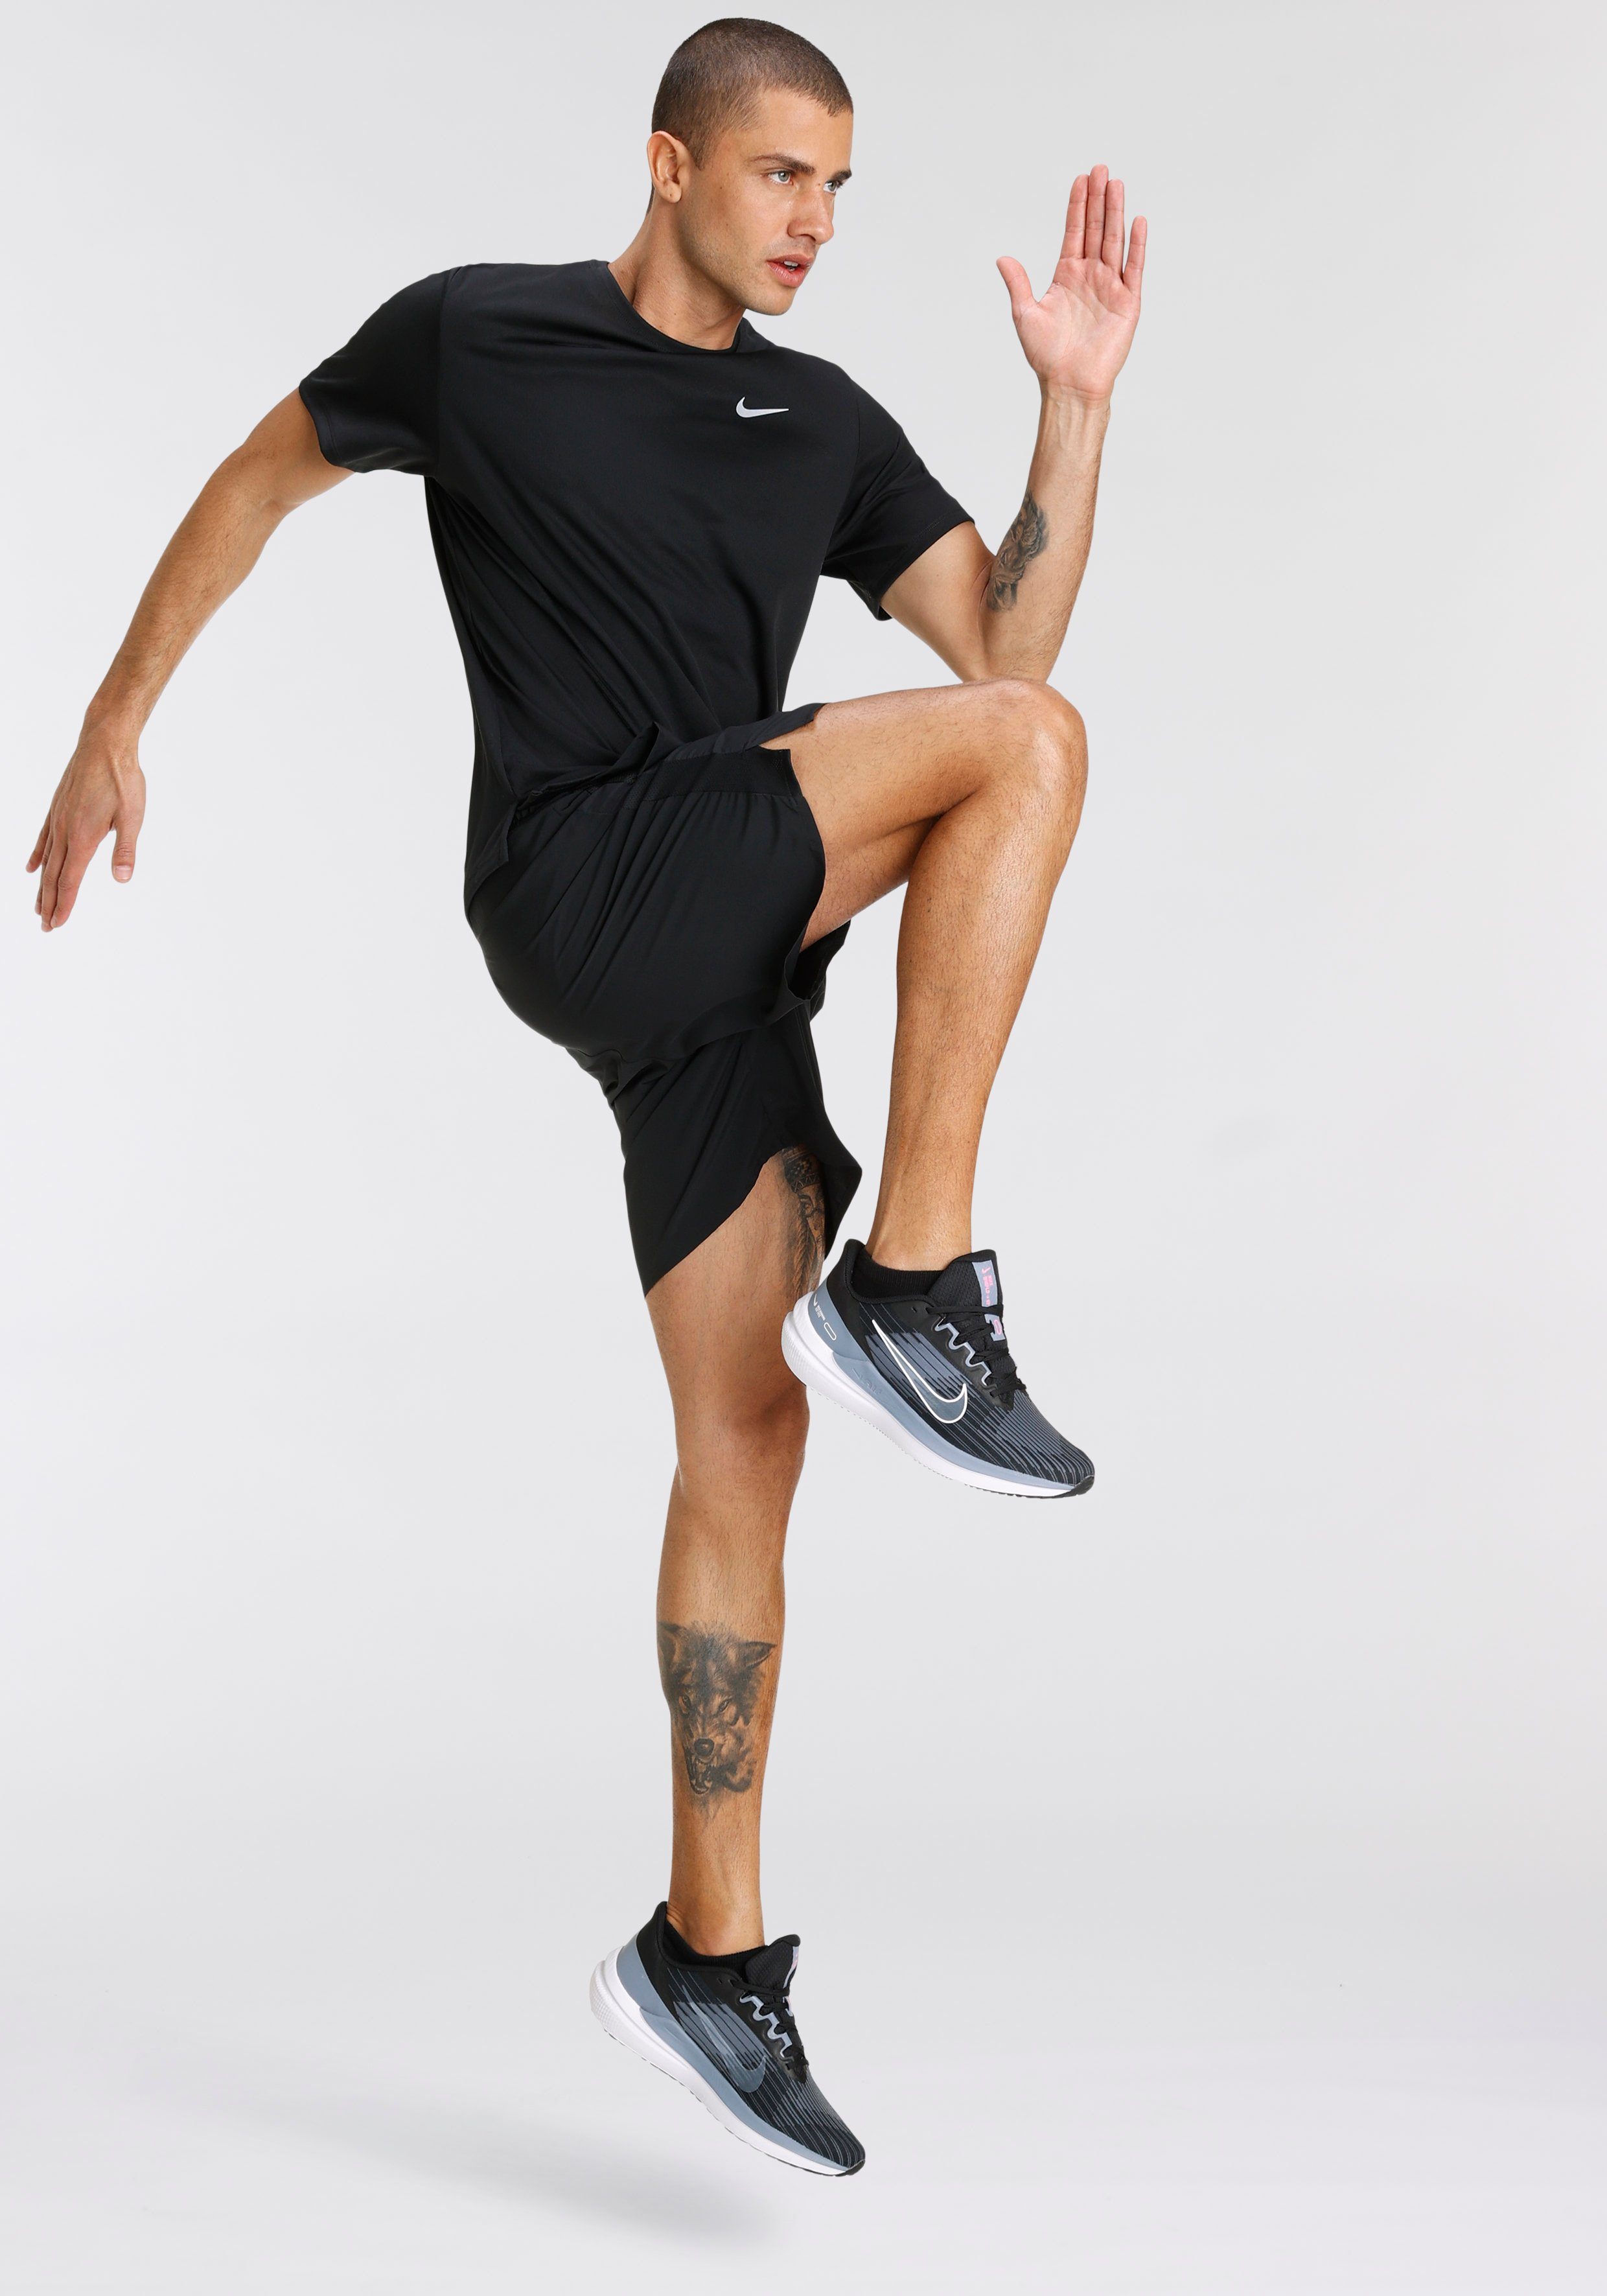 SHORT-SLEEVE SILV Laufshirt BLACK/REFLECTIVE Nike RUNNING DRI-FIT MILER MEN'S UV TOP